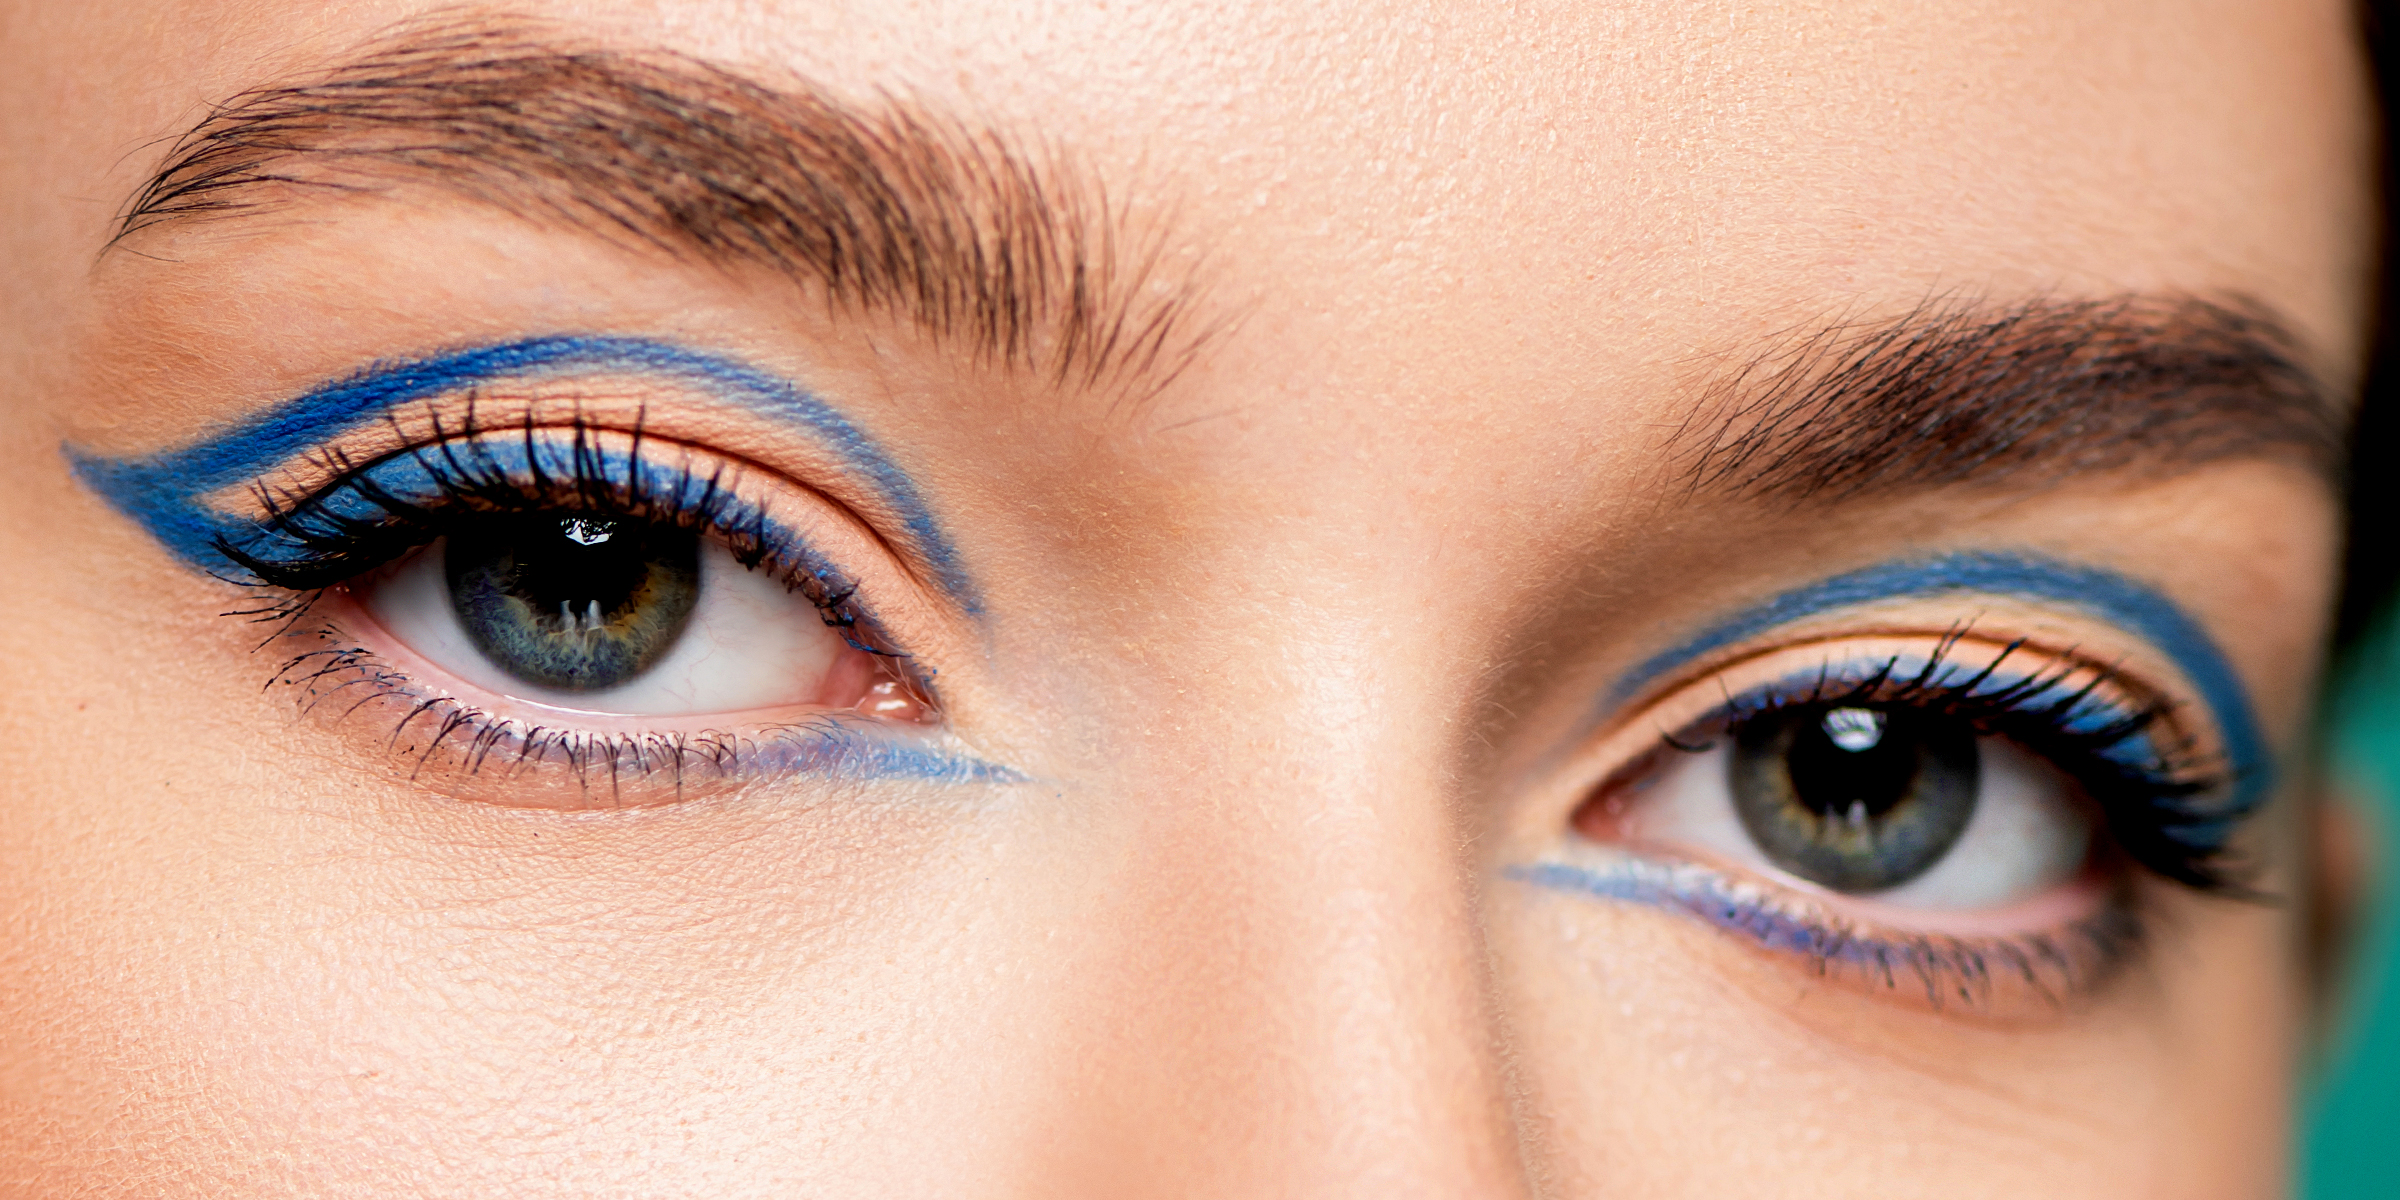 Blue eyeliner. | Source: Shutterstock